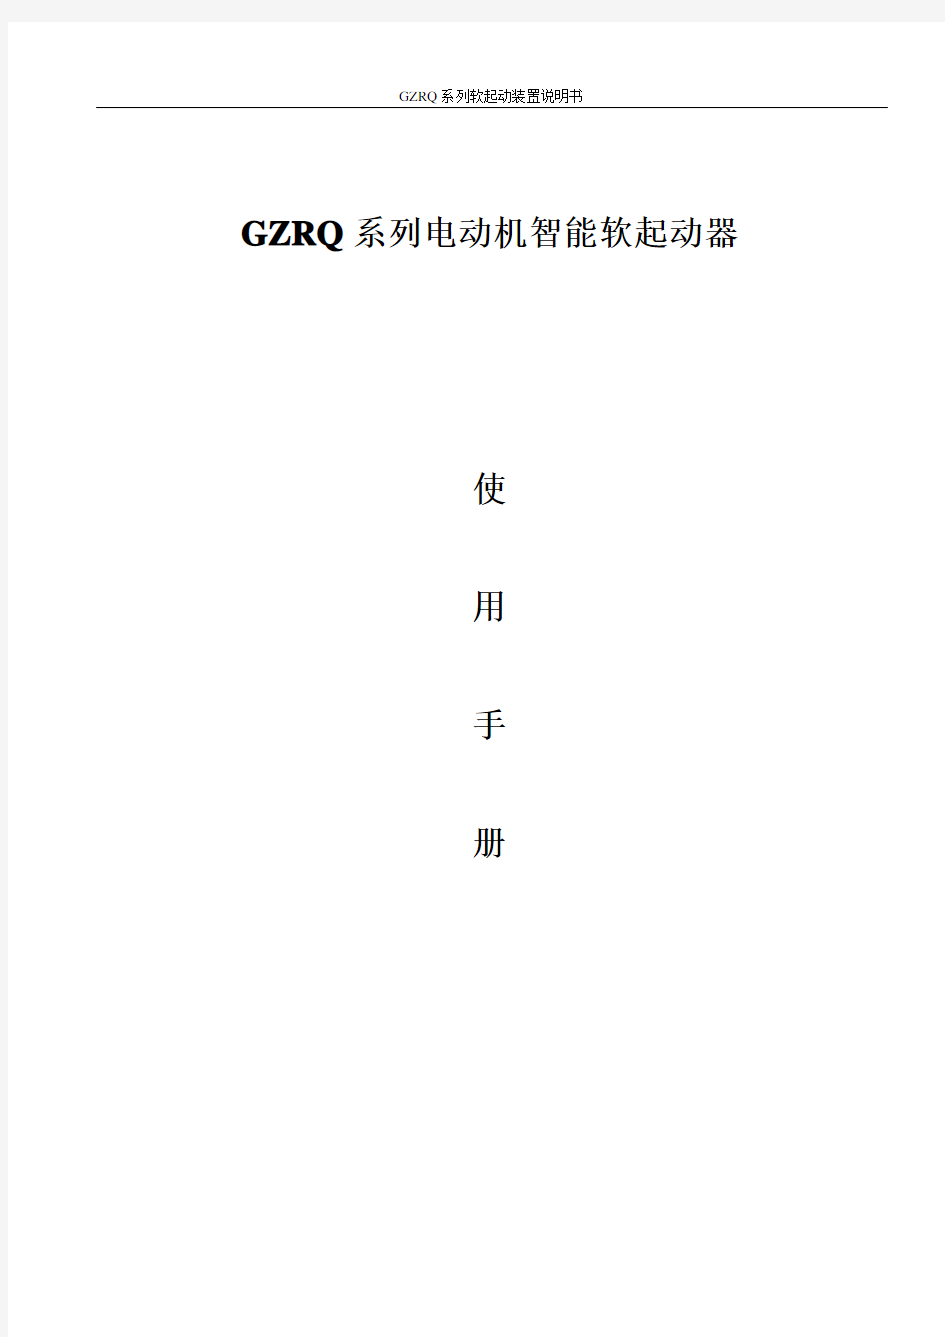 GZRQ高压固态软起装置说明书